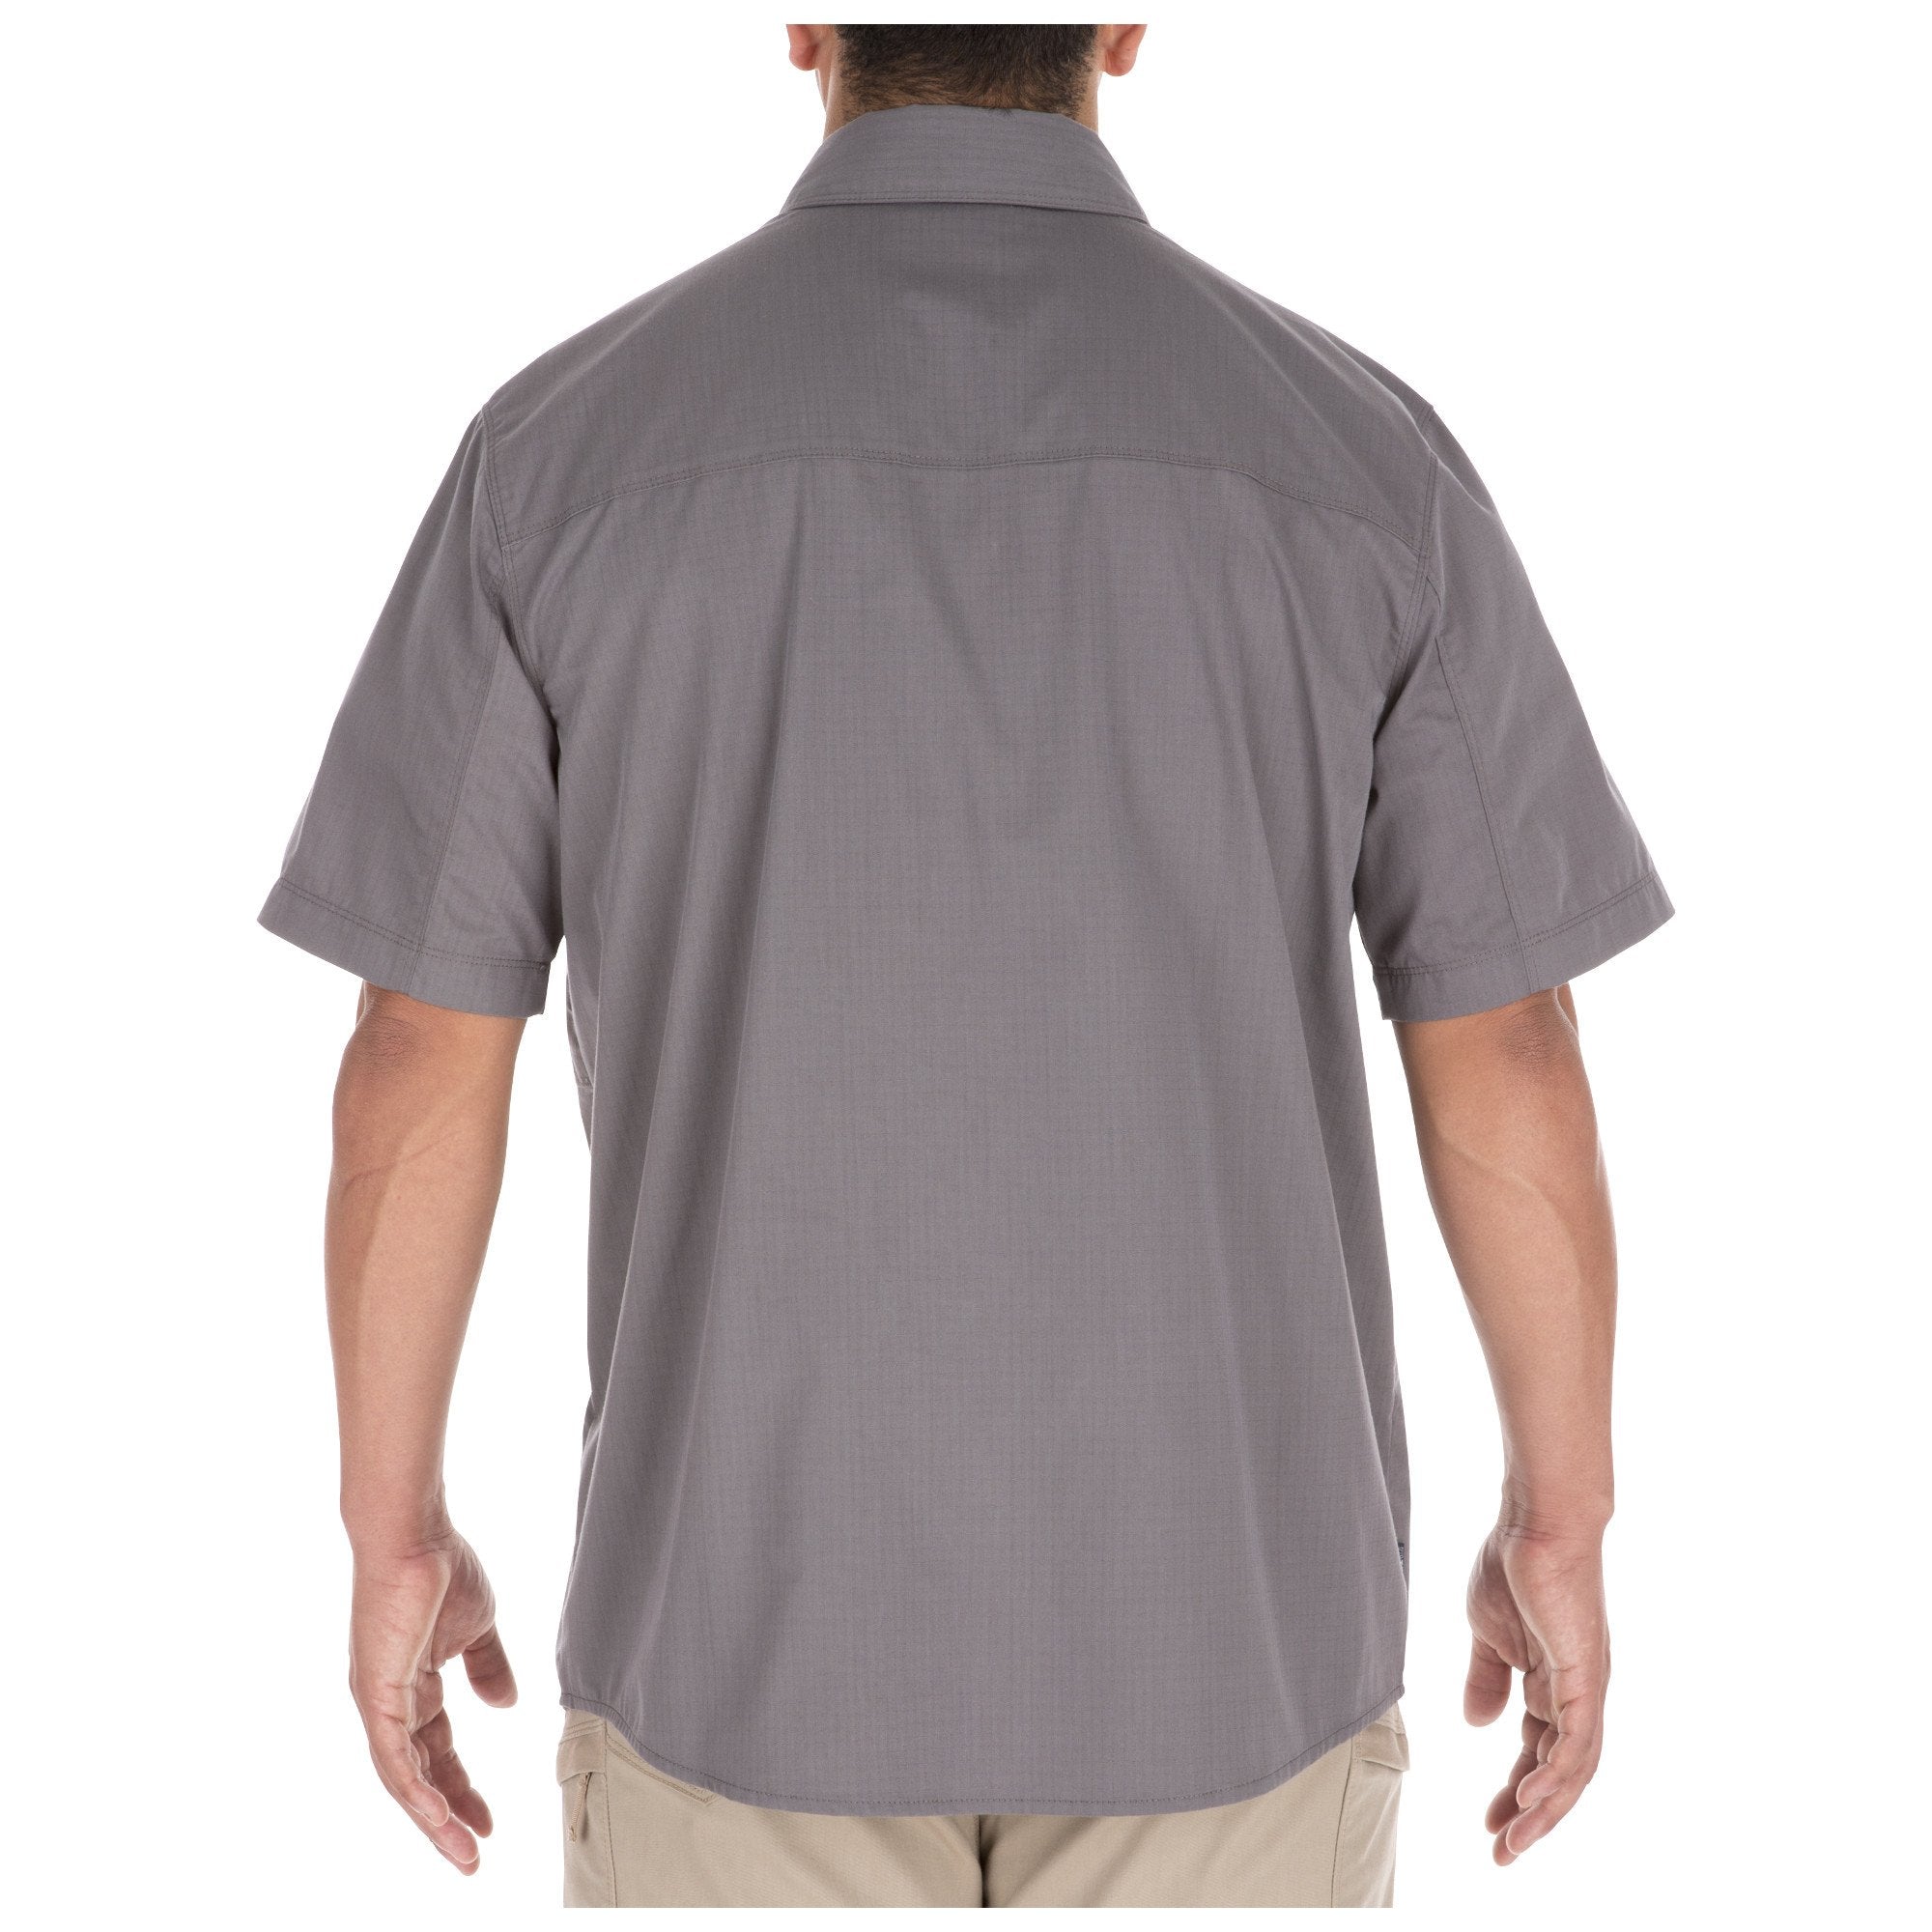 5.11 Tactical Stryke Short Sleeve Shirts Storm Shirts 5.11 Tactical Tactical Gear Supplier Tactical Distributors Australia